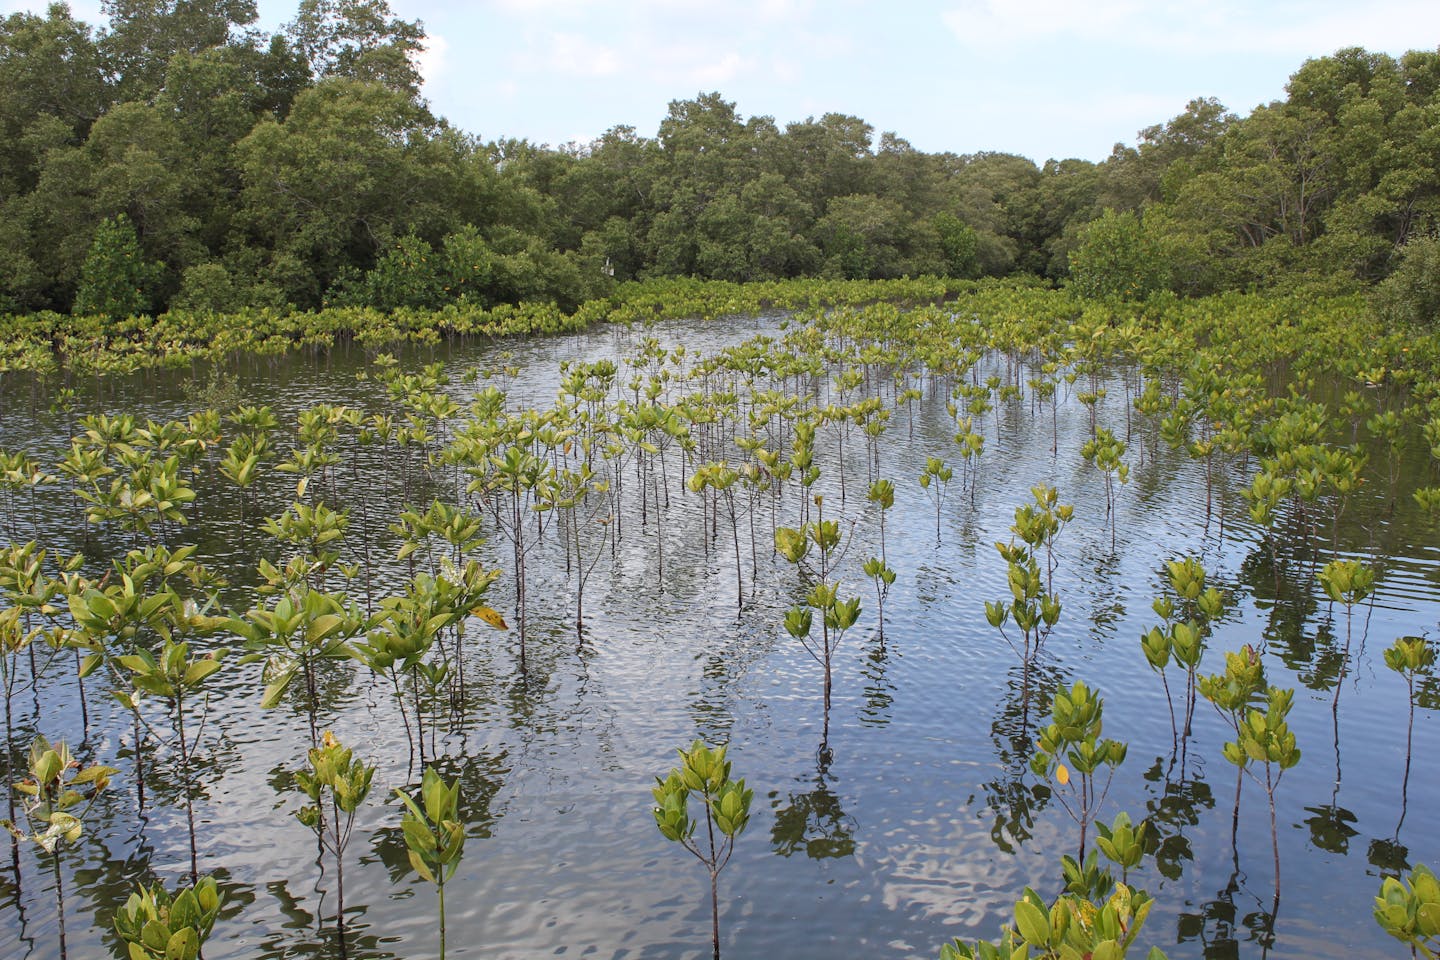 Threatened mangroves